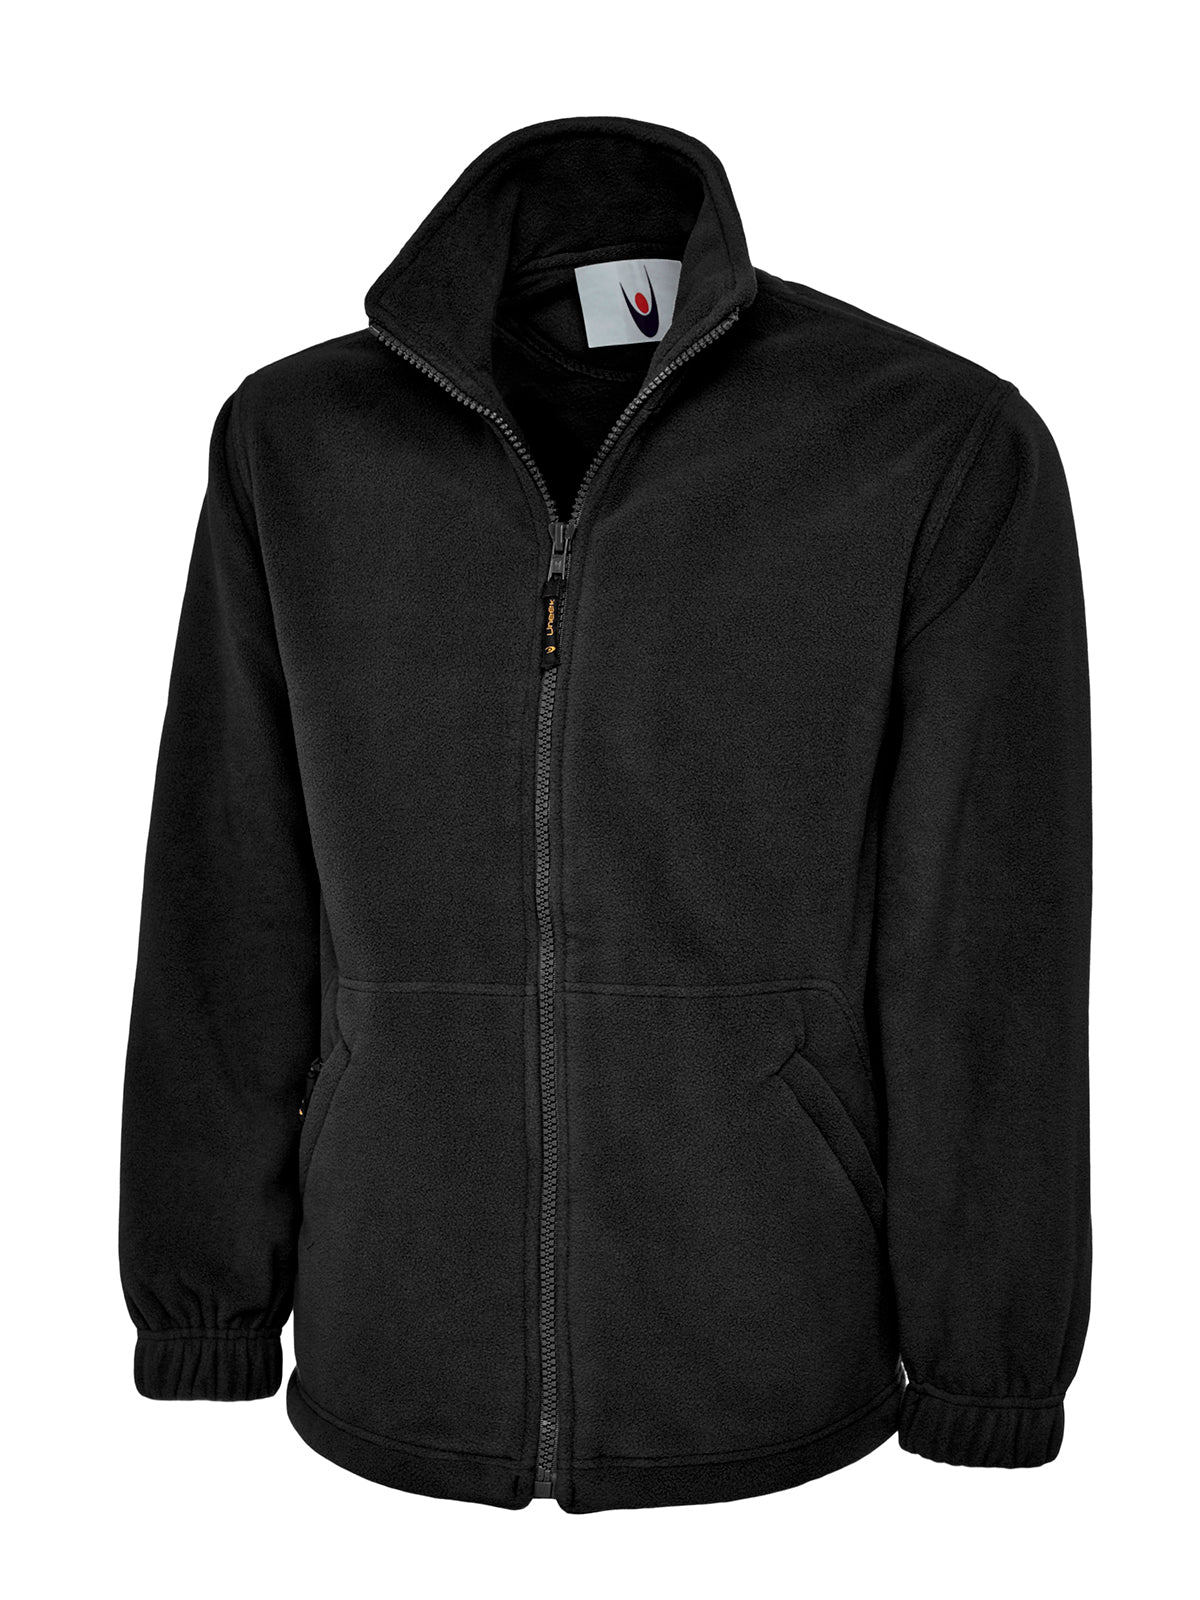 Uneek Classic Full Zip Micro Fleece Jacket UC604 - Black